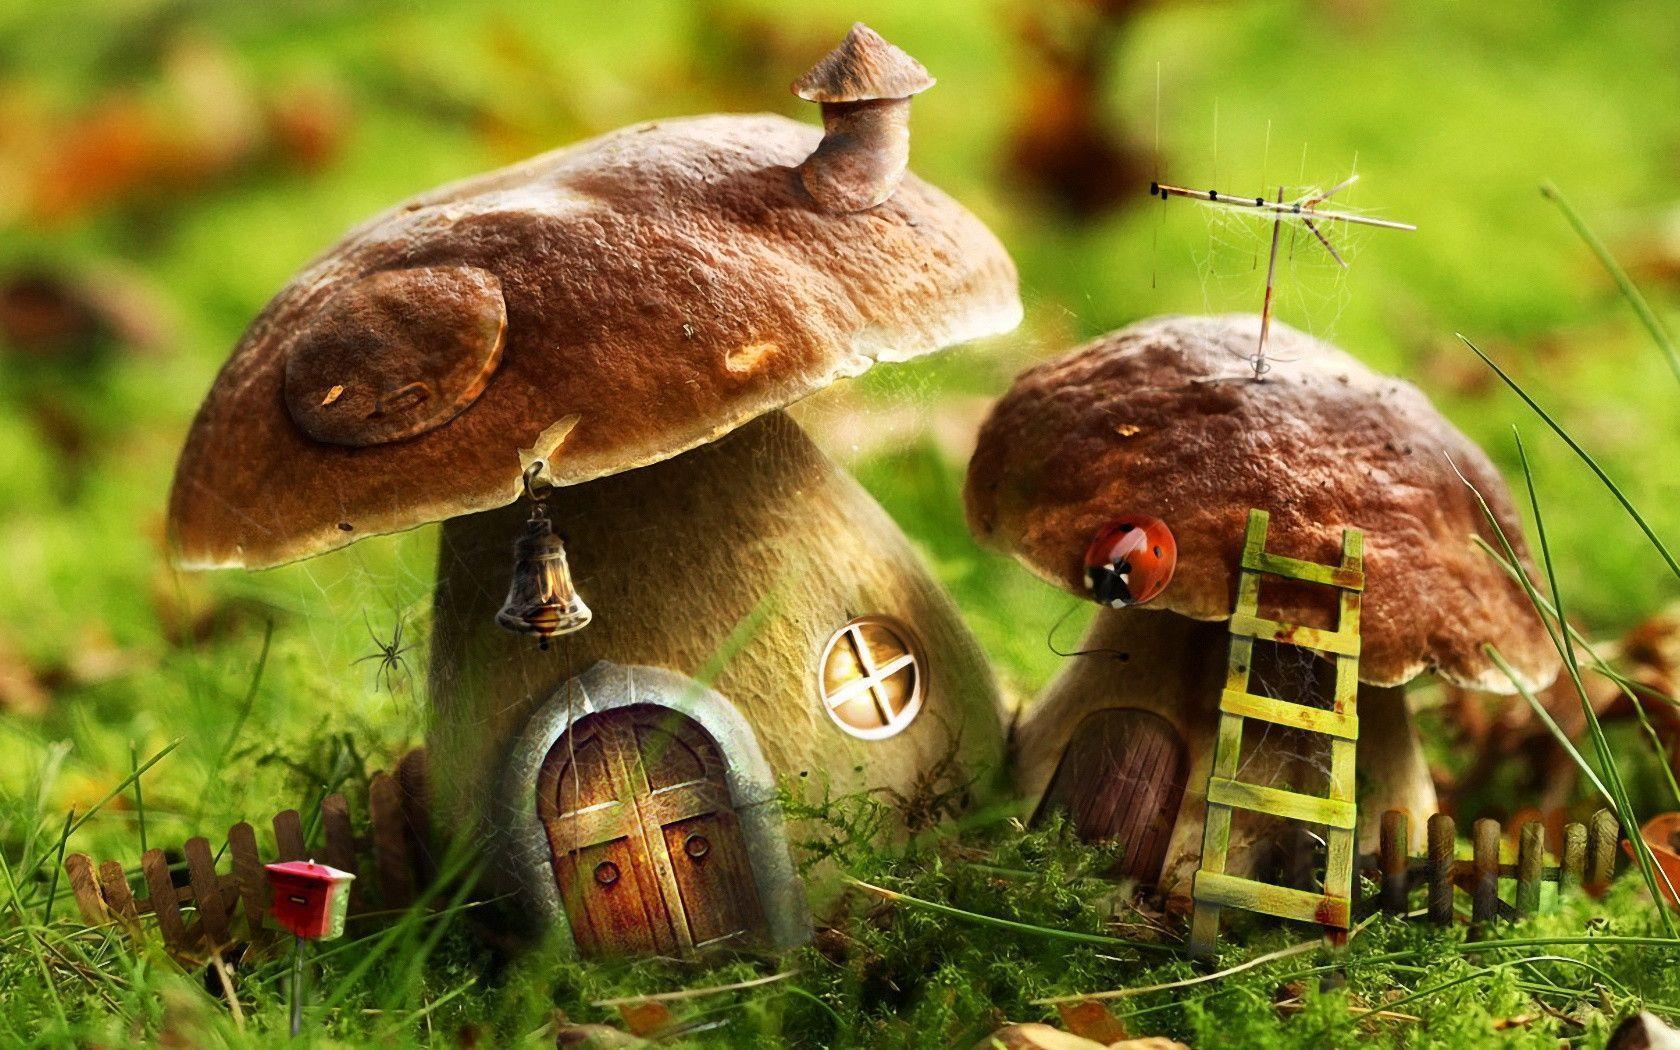 3D Mushroom Wallpaper. Piccry.com: Picture Idea Gallery